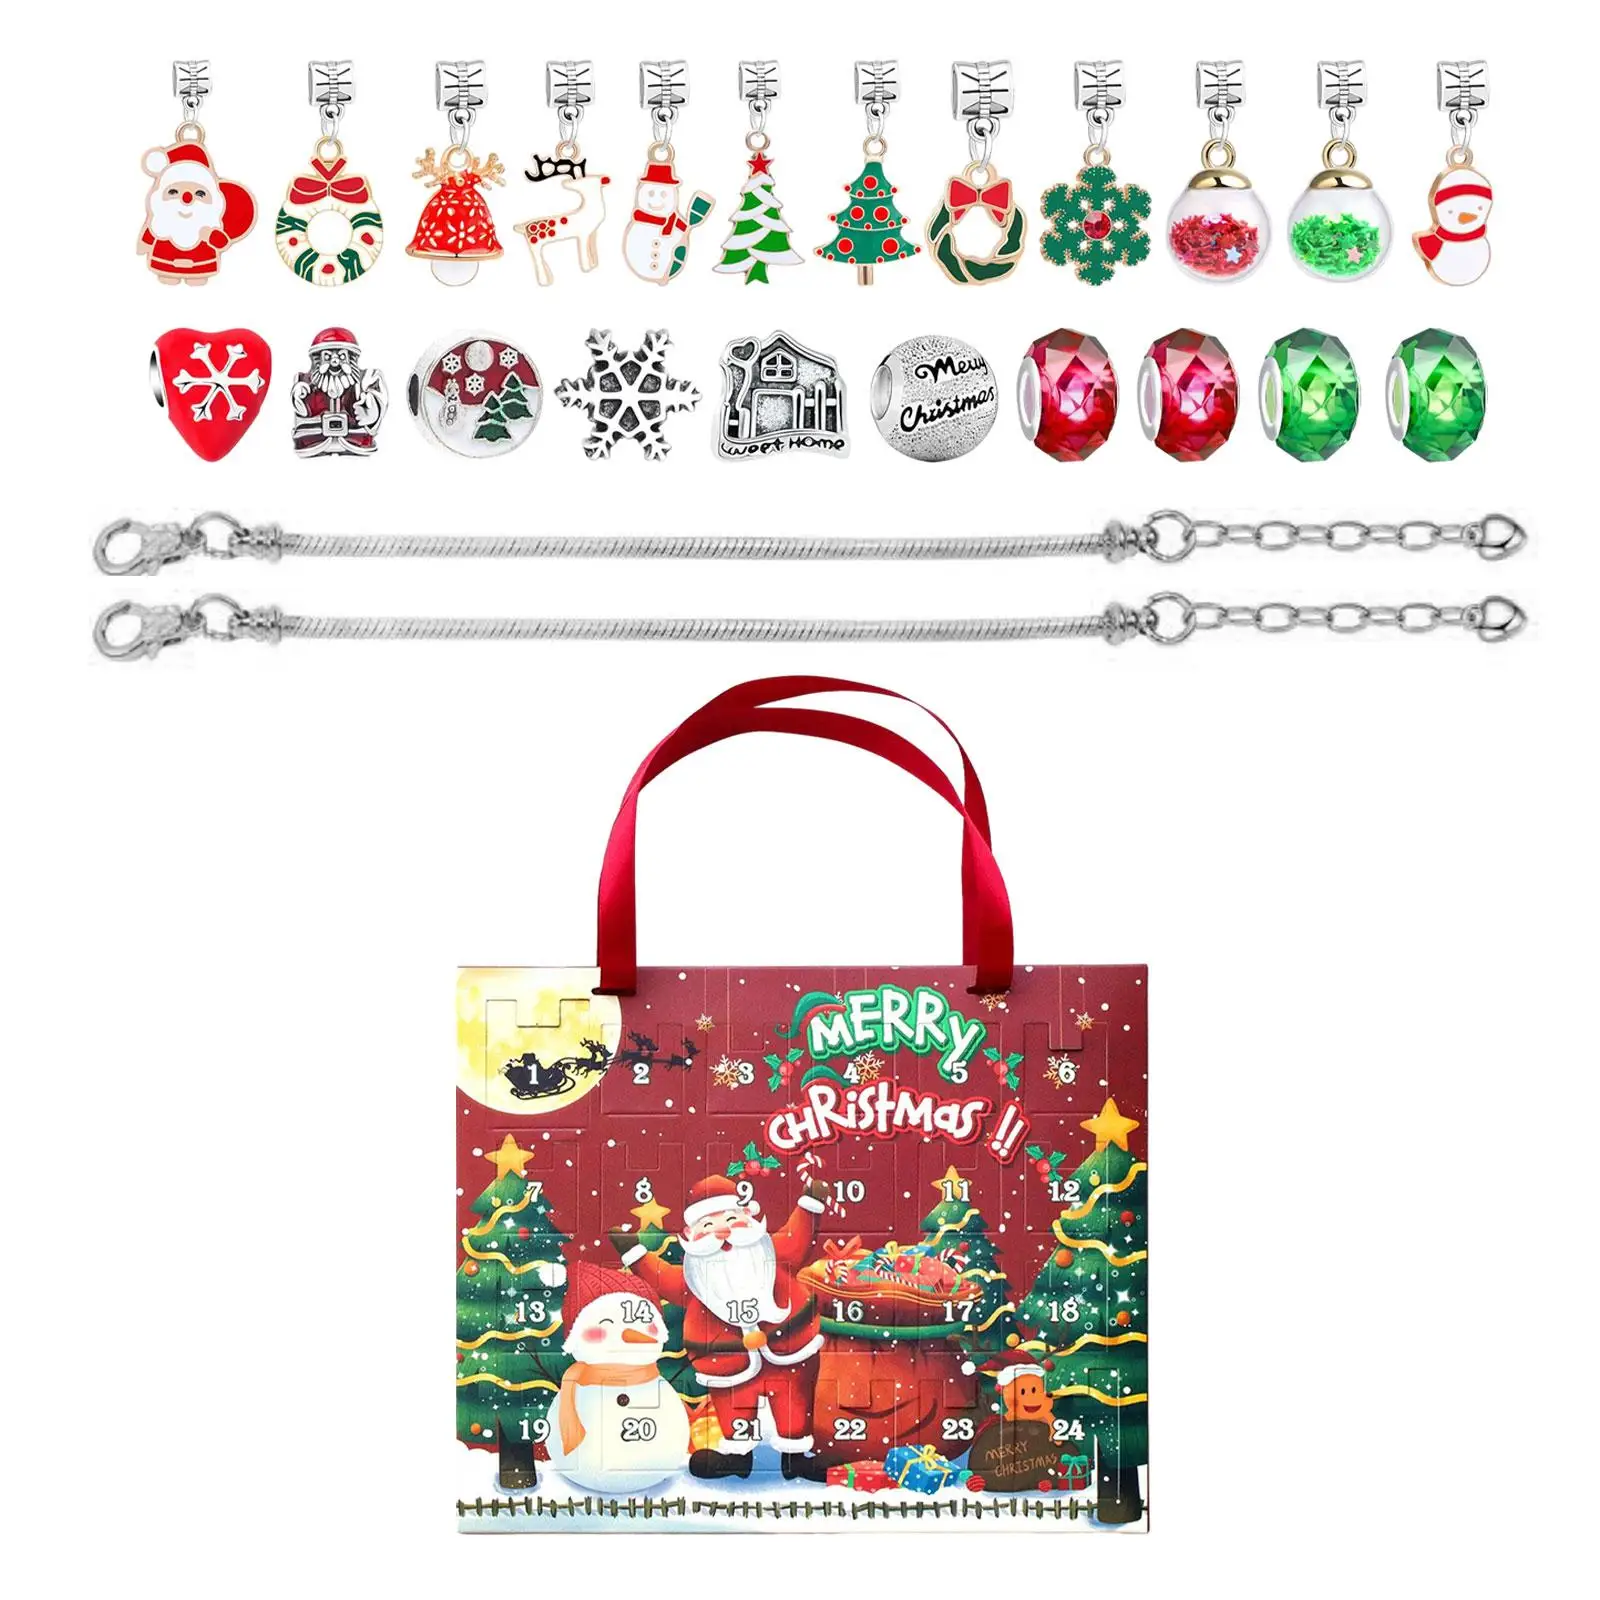 24 Grid Calendar Christmas DIY Bracelet Box Decor Festive Jewelry Making Handmade Kids Bangle Kids Gift Charm Bracelet Box Set